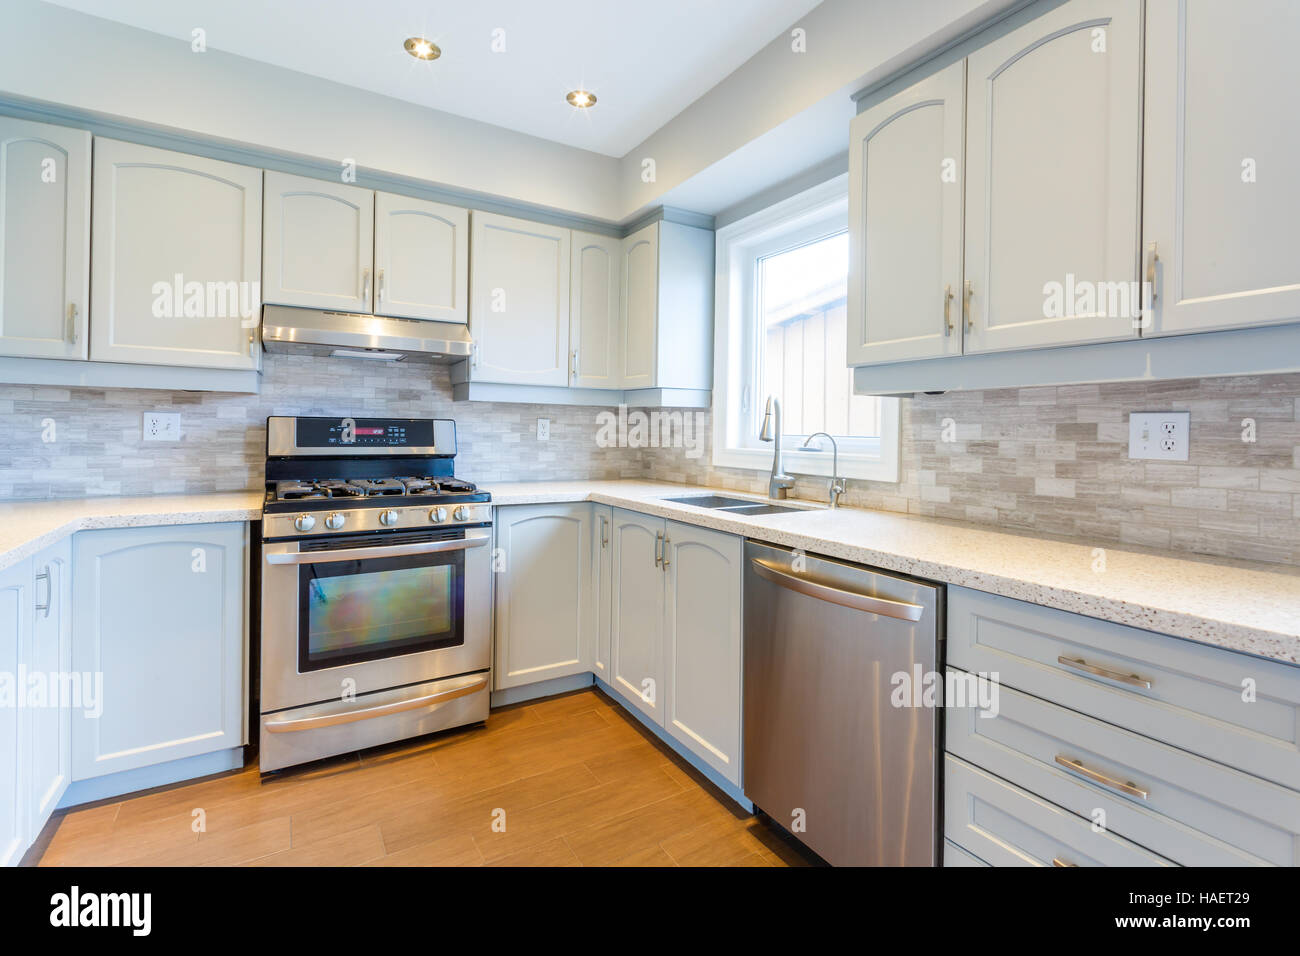 Kitchen interior in new luxury home Stock Photo